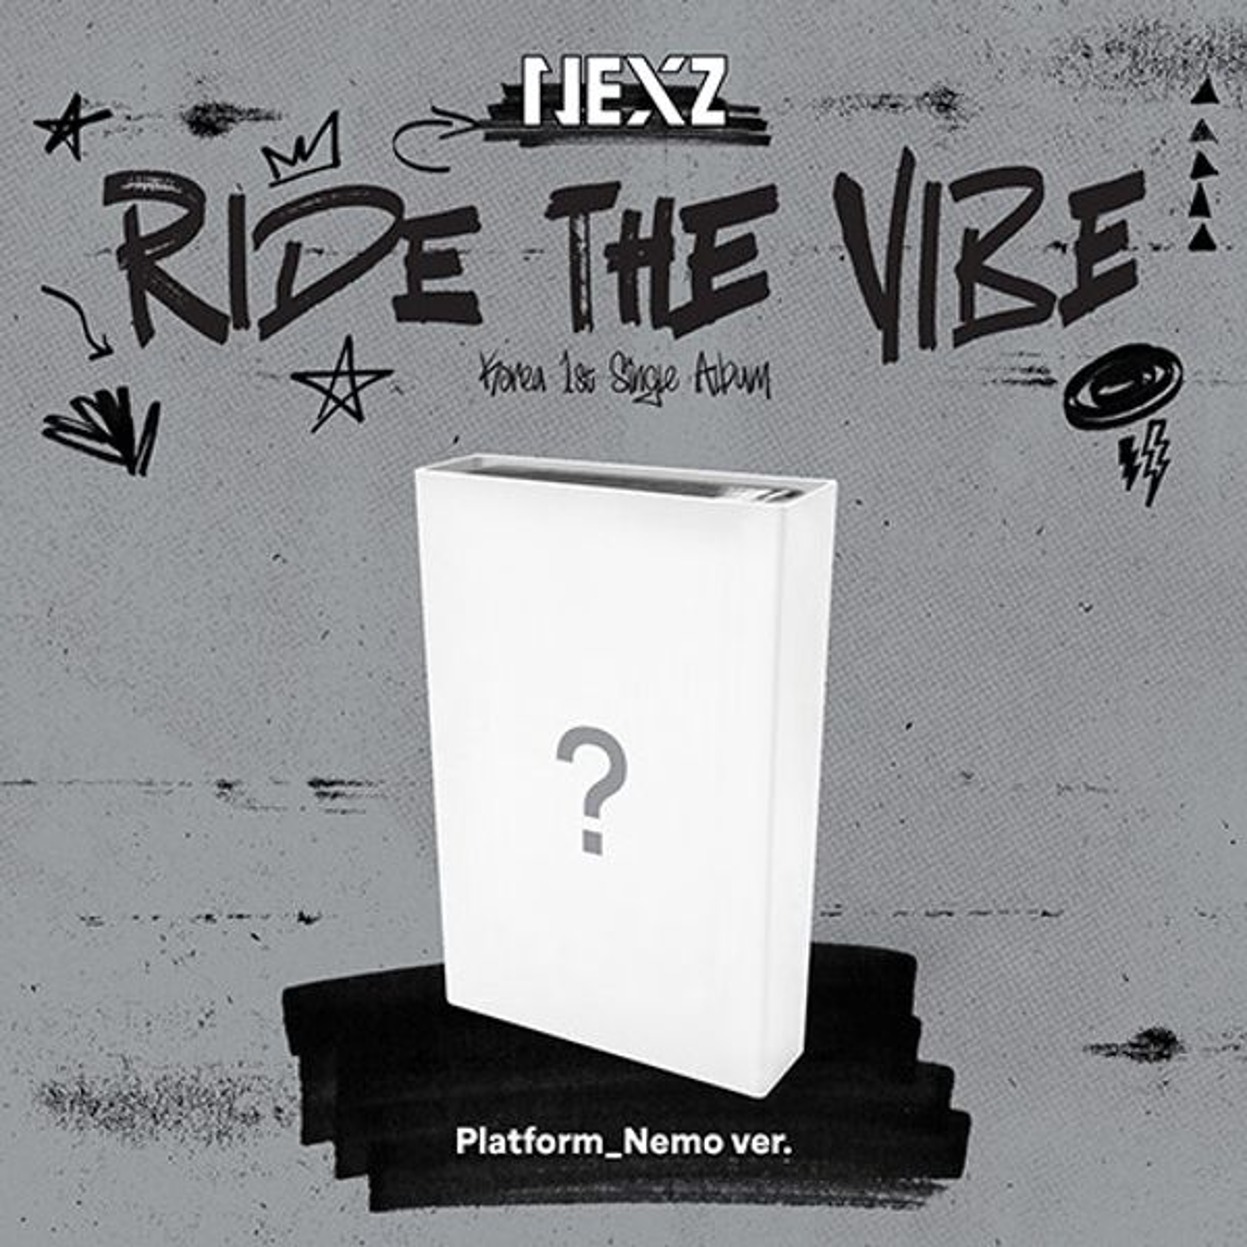 [NEXZ] - 单曲专辑 1辑 [Ride the Vibe] (SPECIAL EDITION)